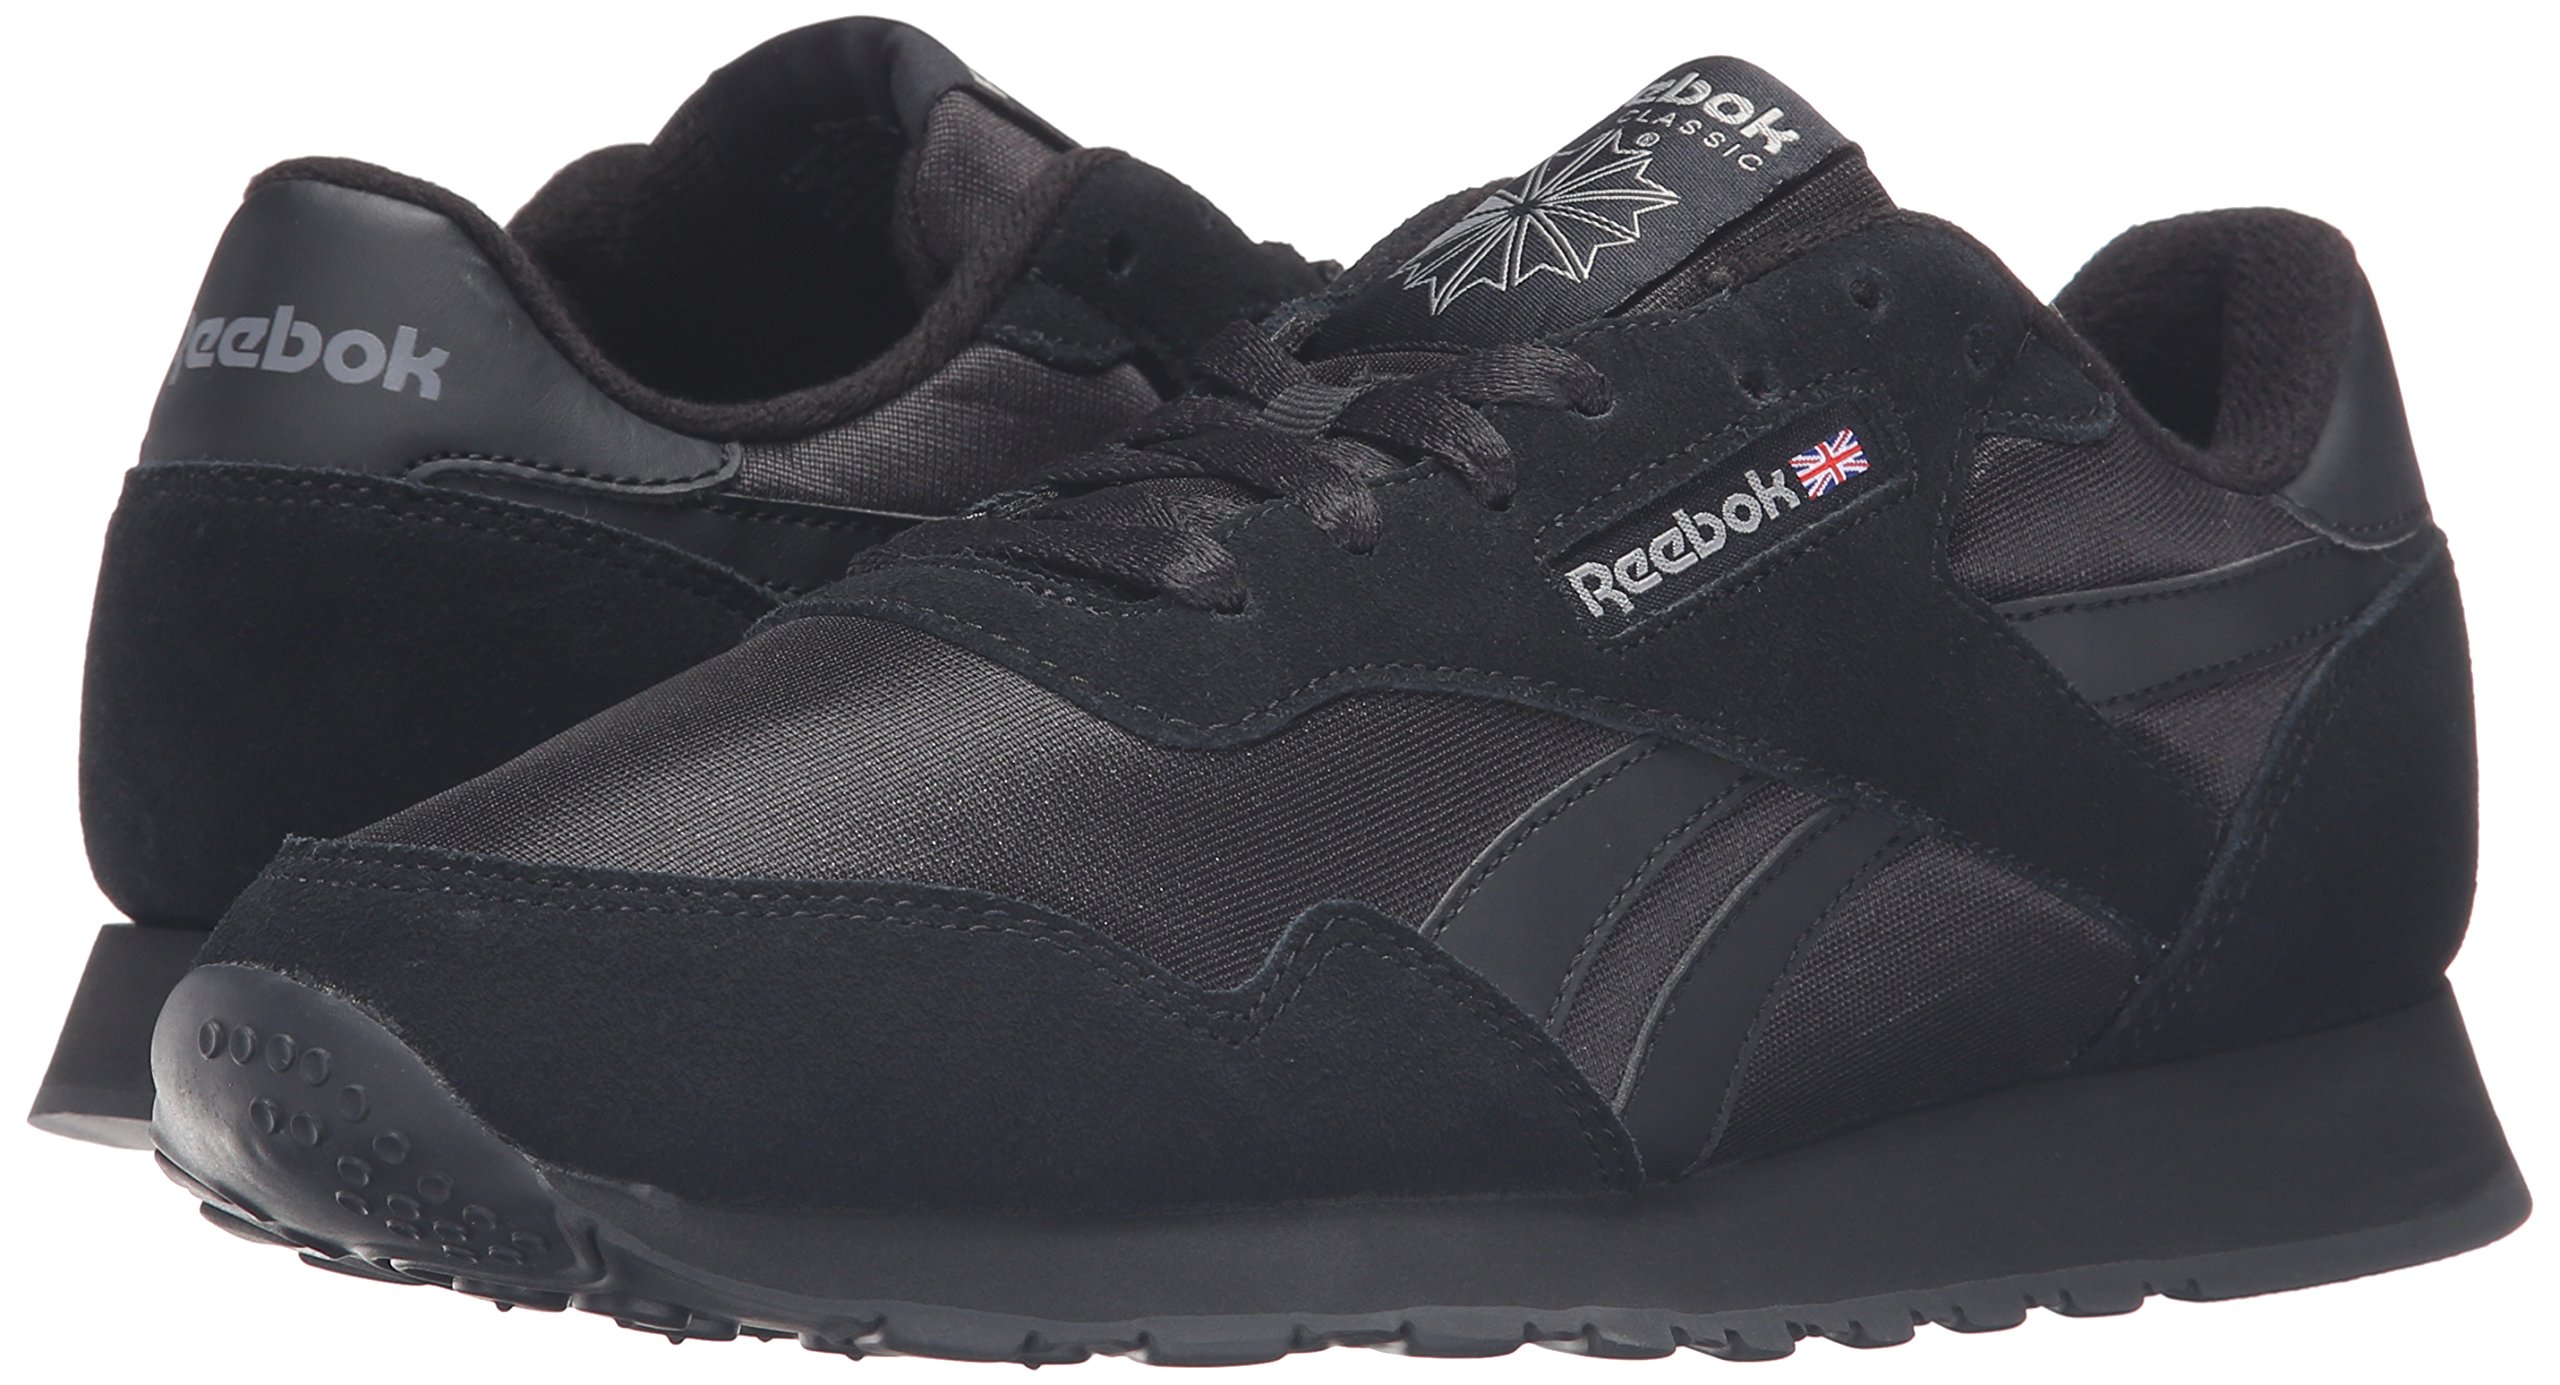 Reebok Men's Classic Nylon Walking Shoe, Black/Carbon, 13